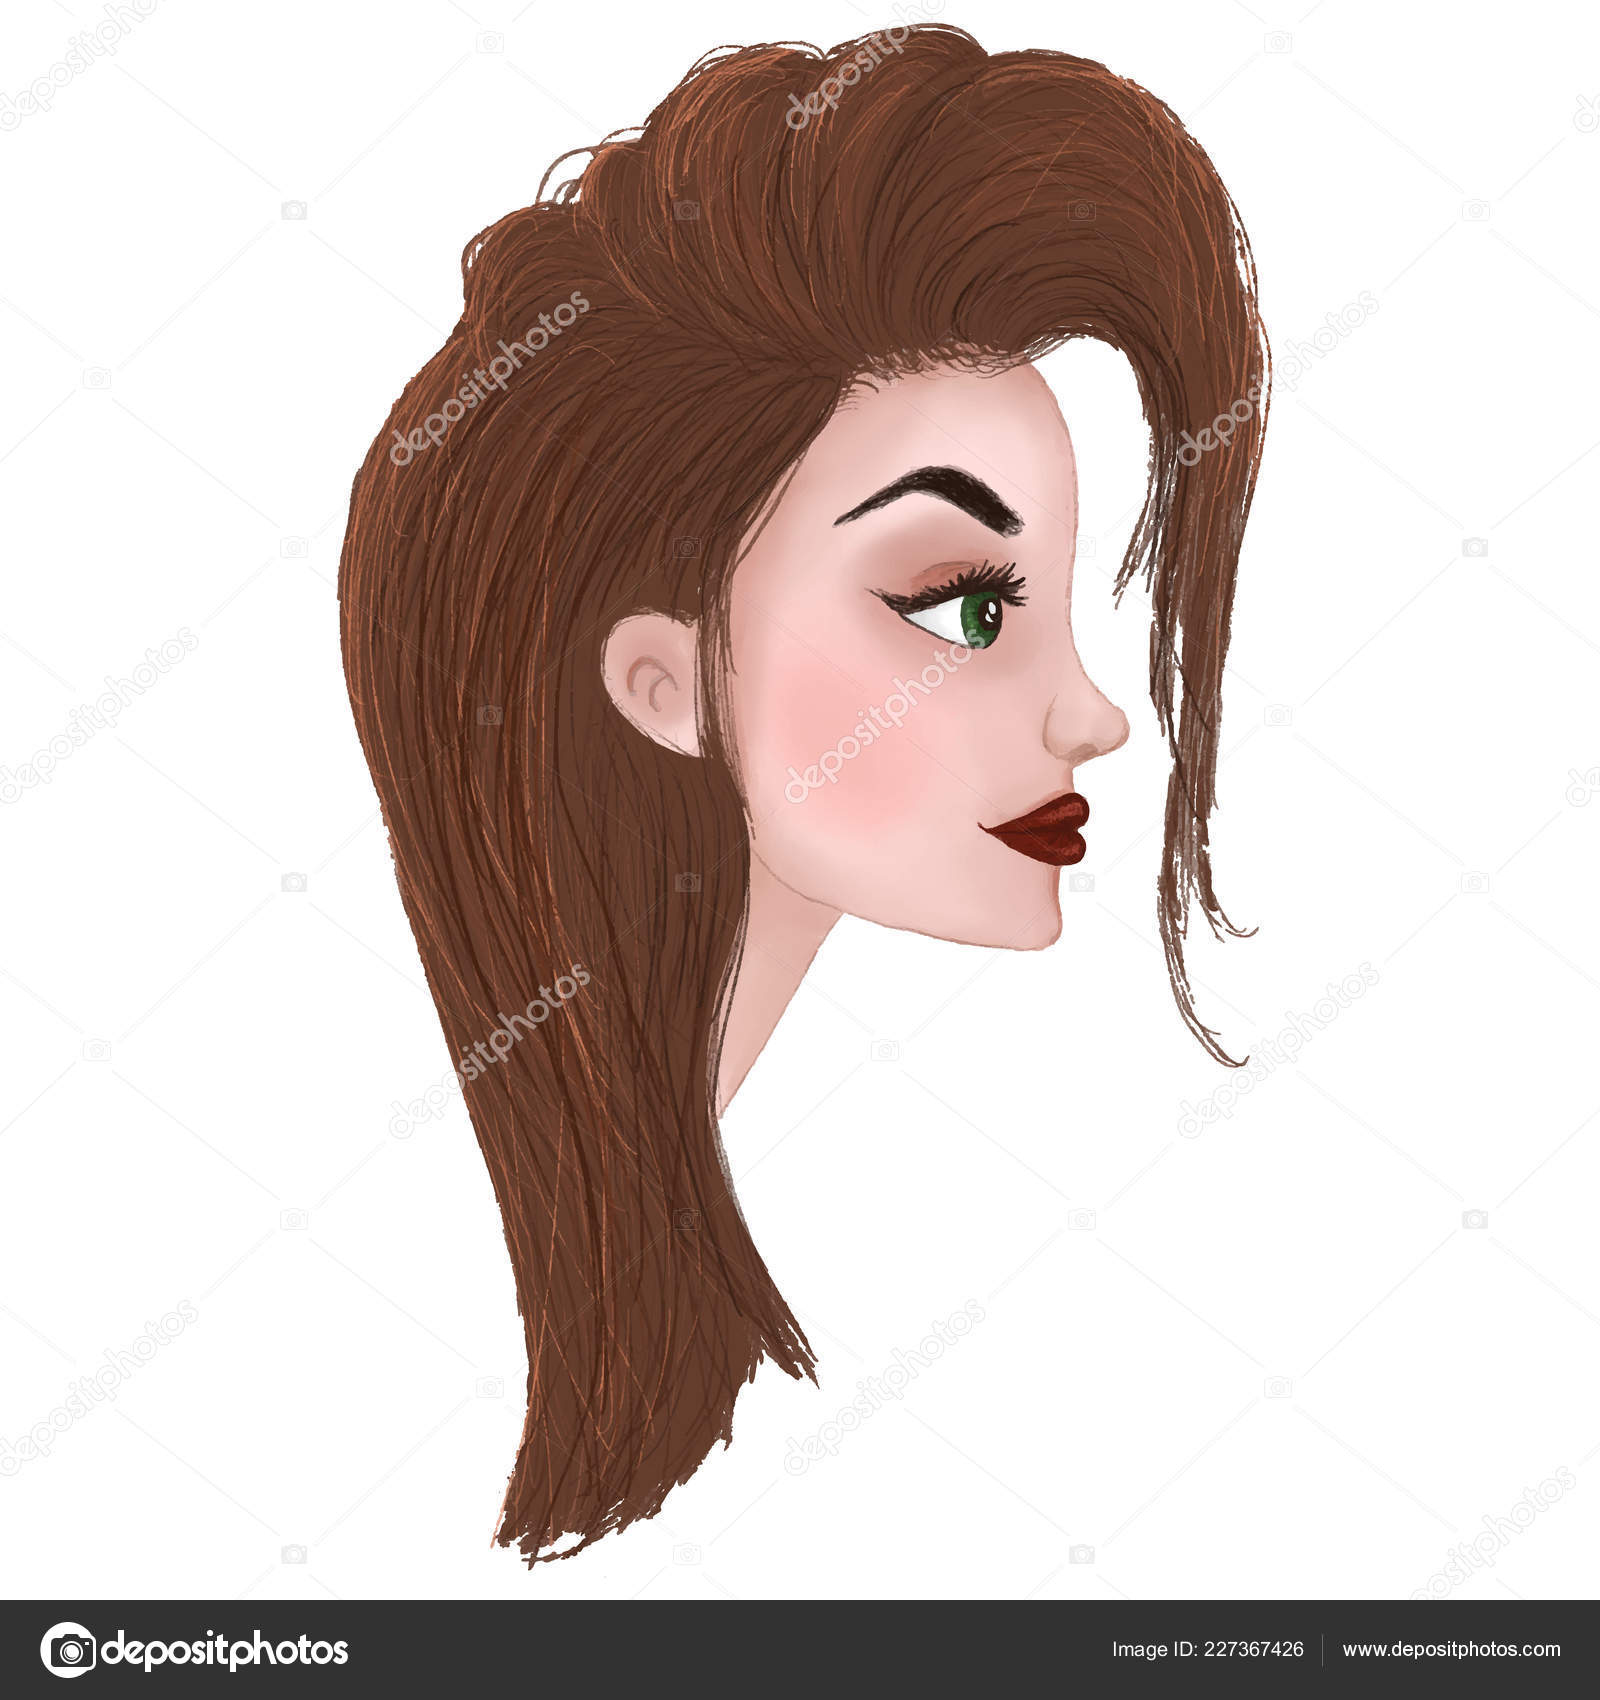 Animated Cartoon Girl Profile Picture Portrait In Profile